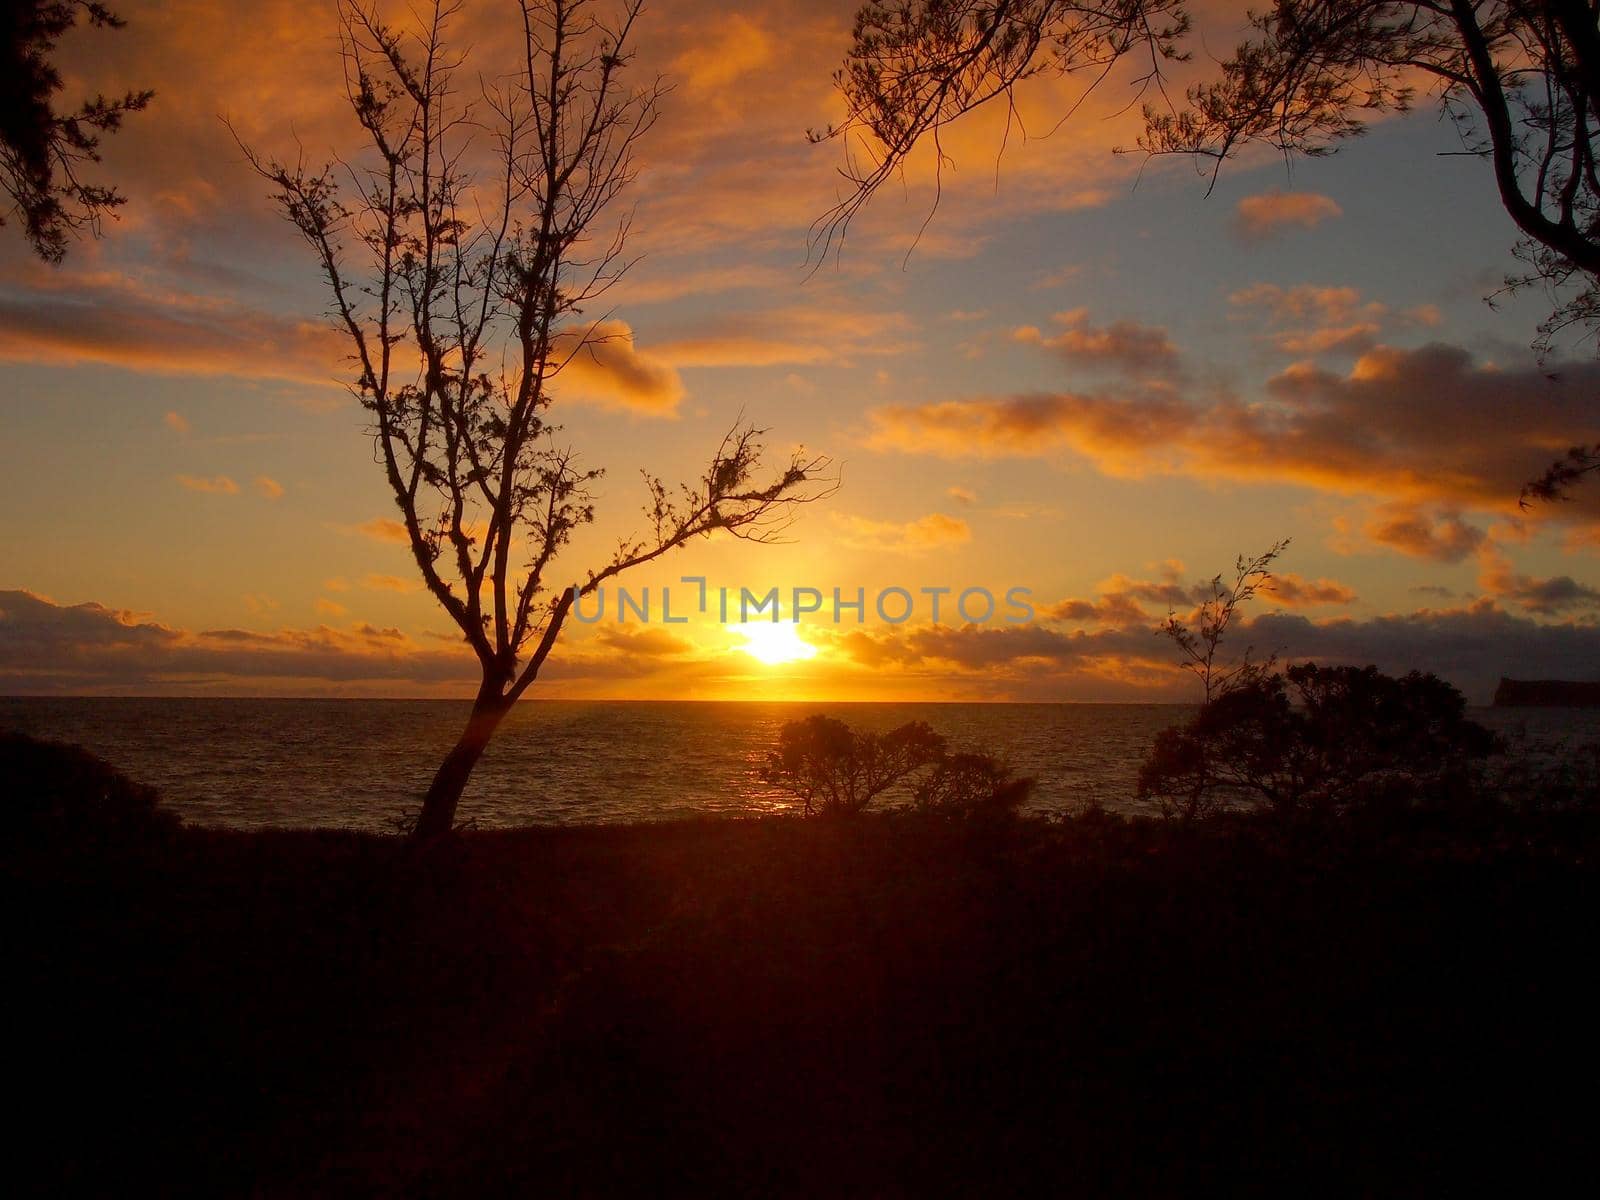 Early Morning Sunrise on Waimanalo Beach over ocean  by EricGBVD